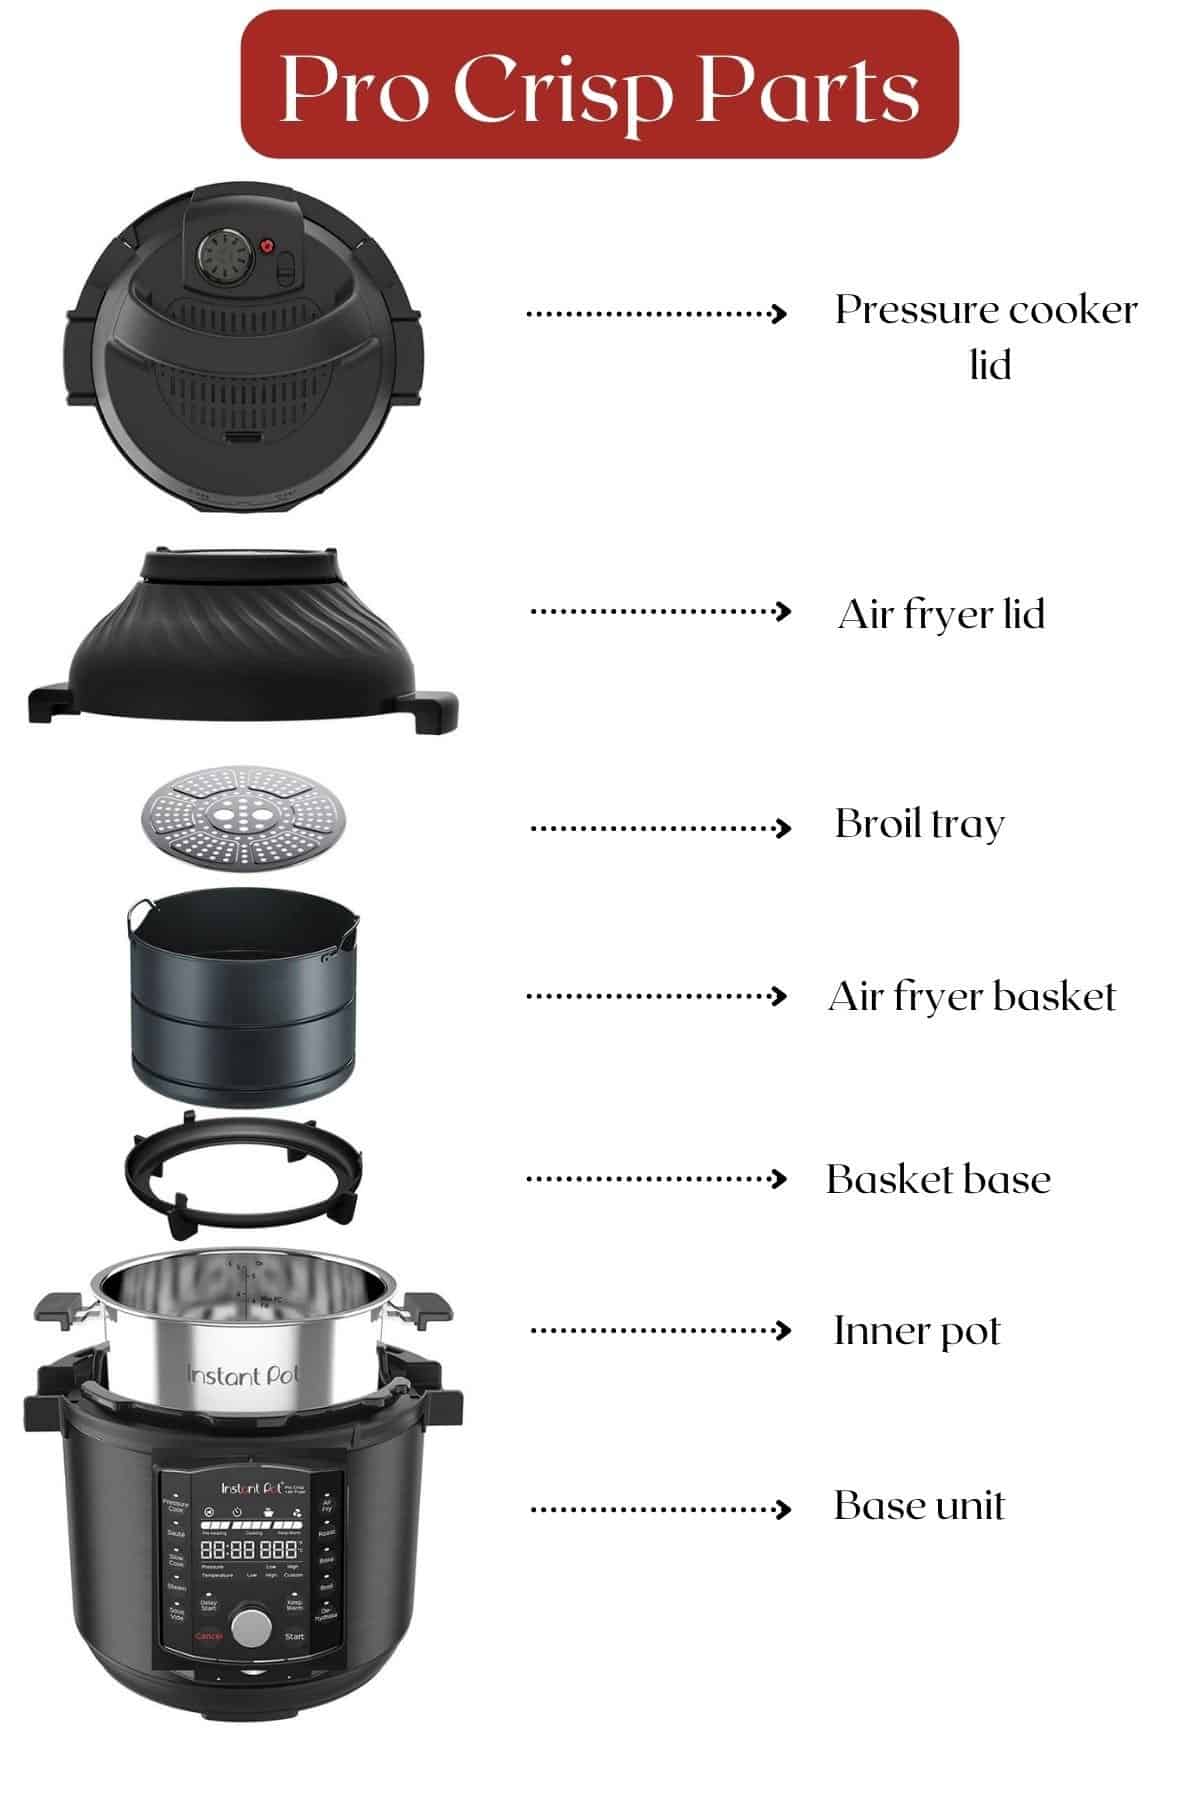 Duo crisp parts - pressure cooker lid, air fryer lid, broil tray, air fryer basket, basket base, inner pot, base unit